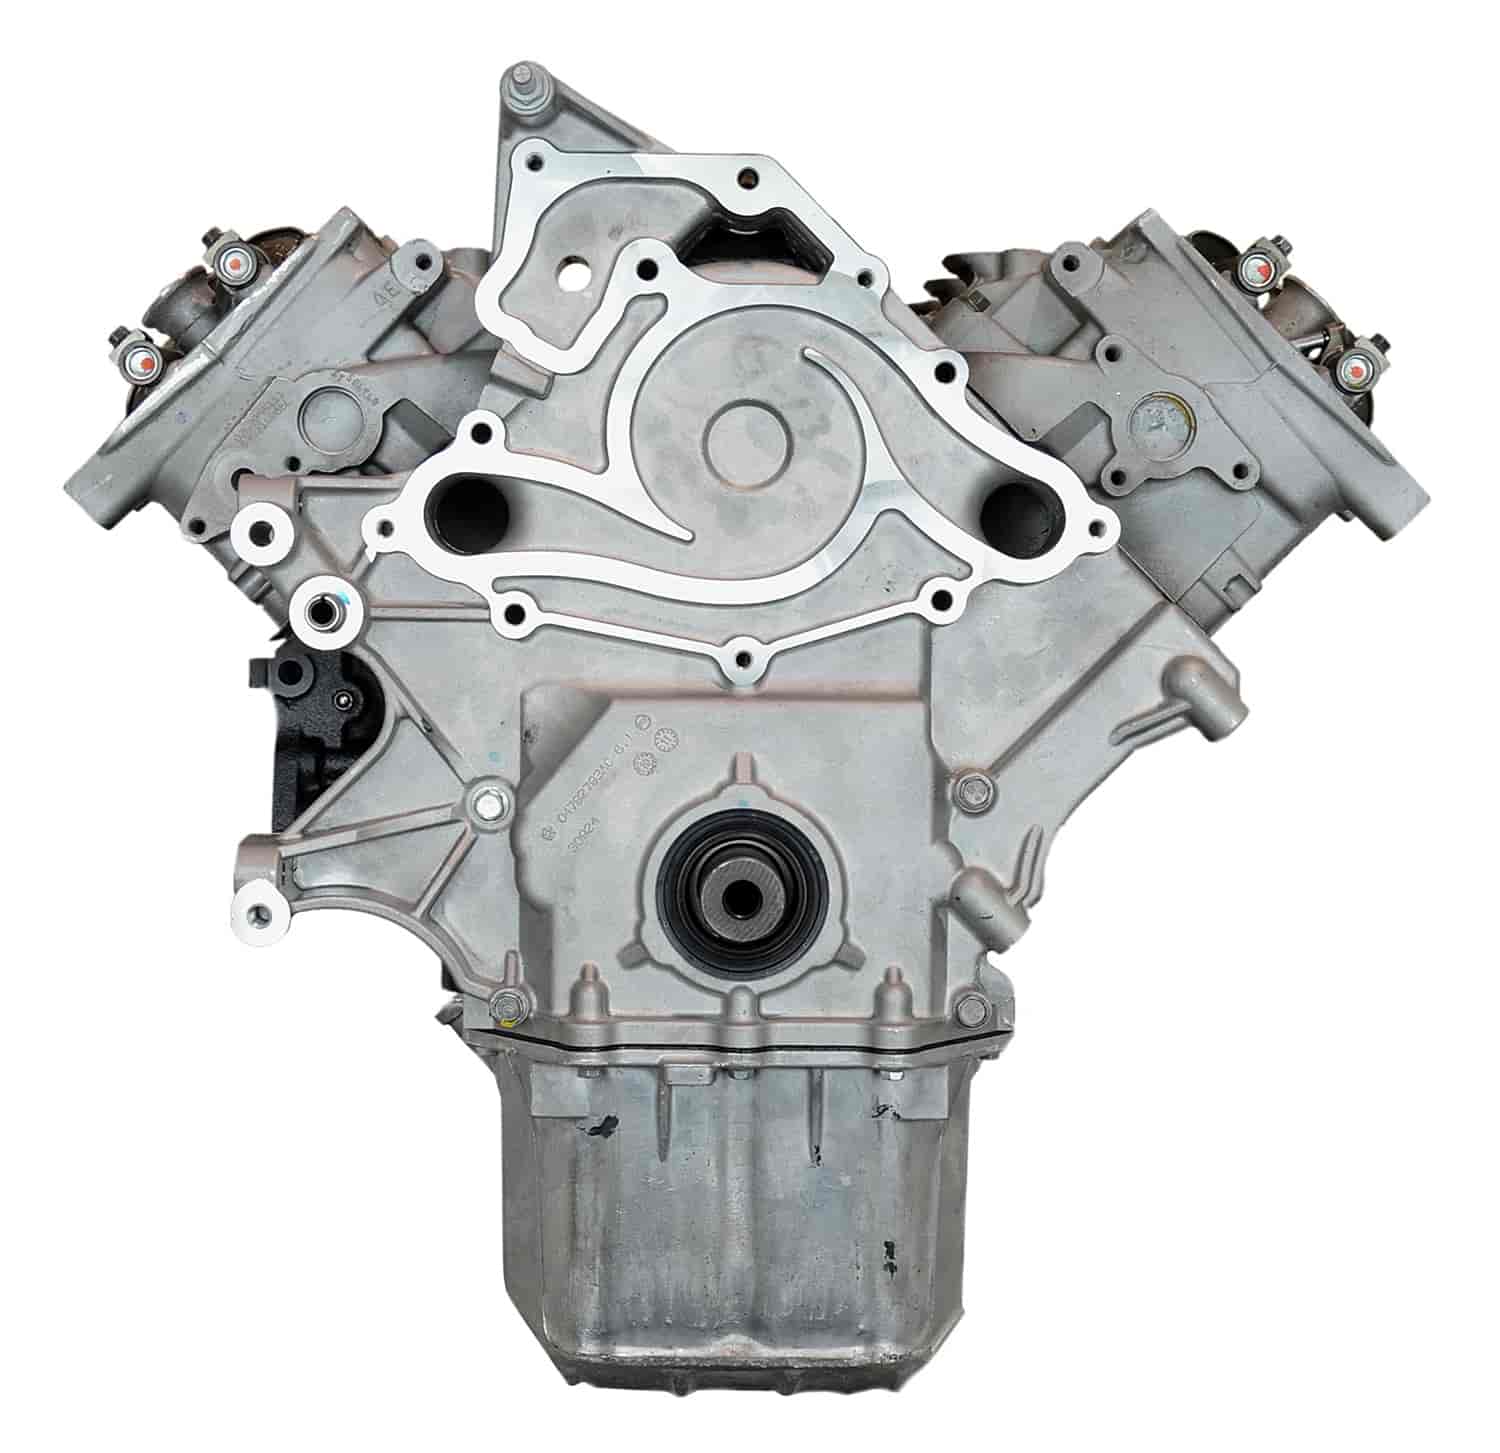 Remanufactured Crate Engine for 2005-2008 Chrysler 300 & Dodge Charger/Magnum with 5.7L HEMI V8